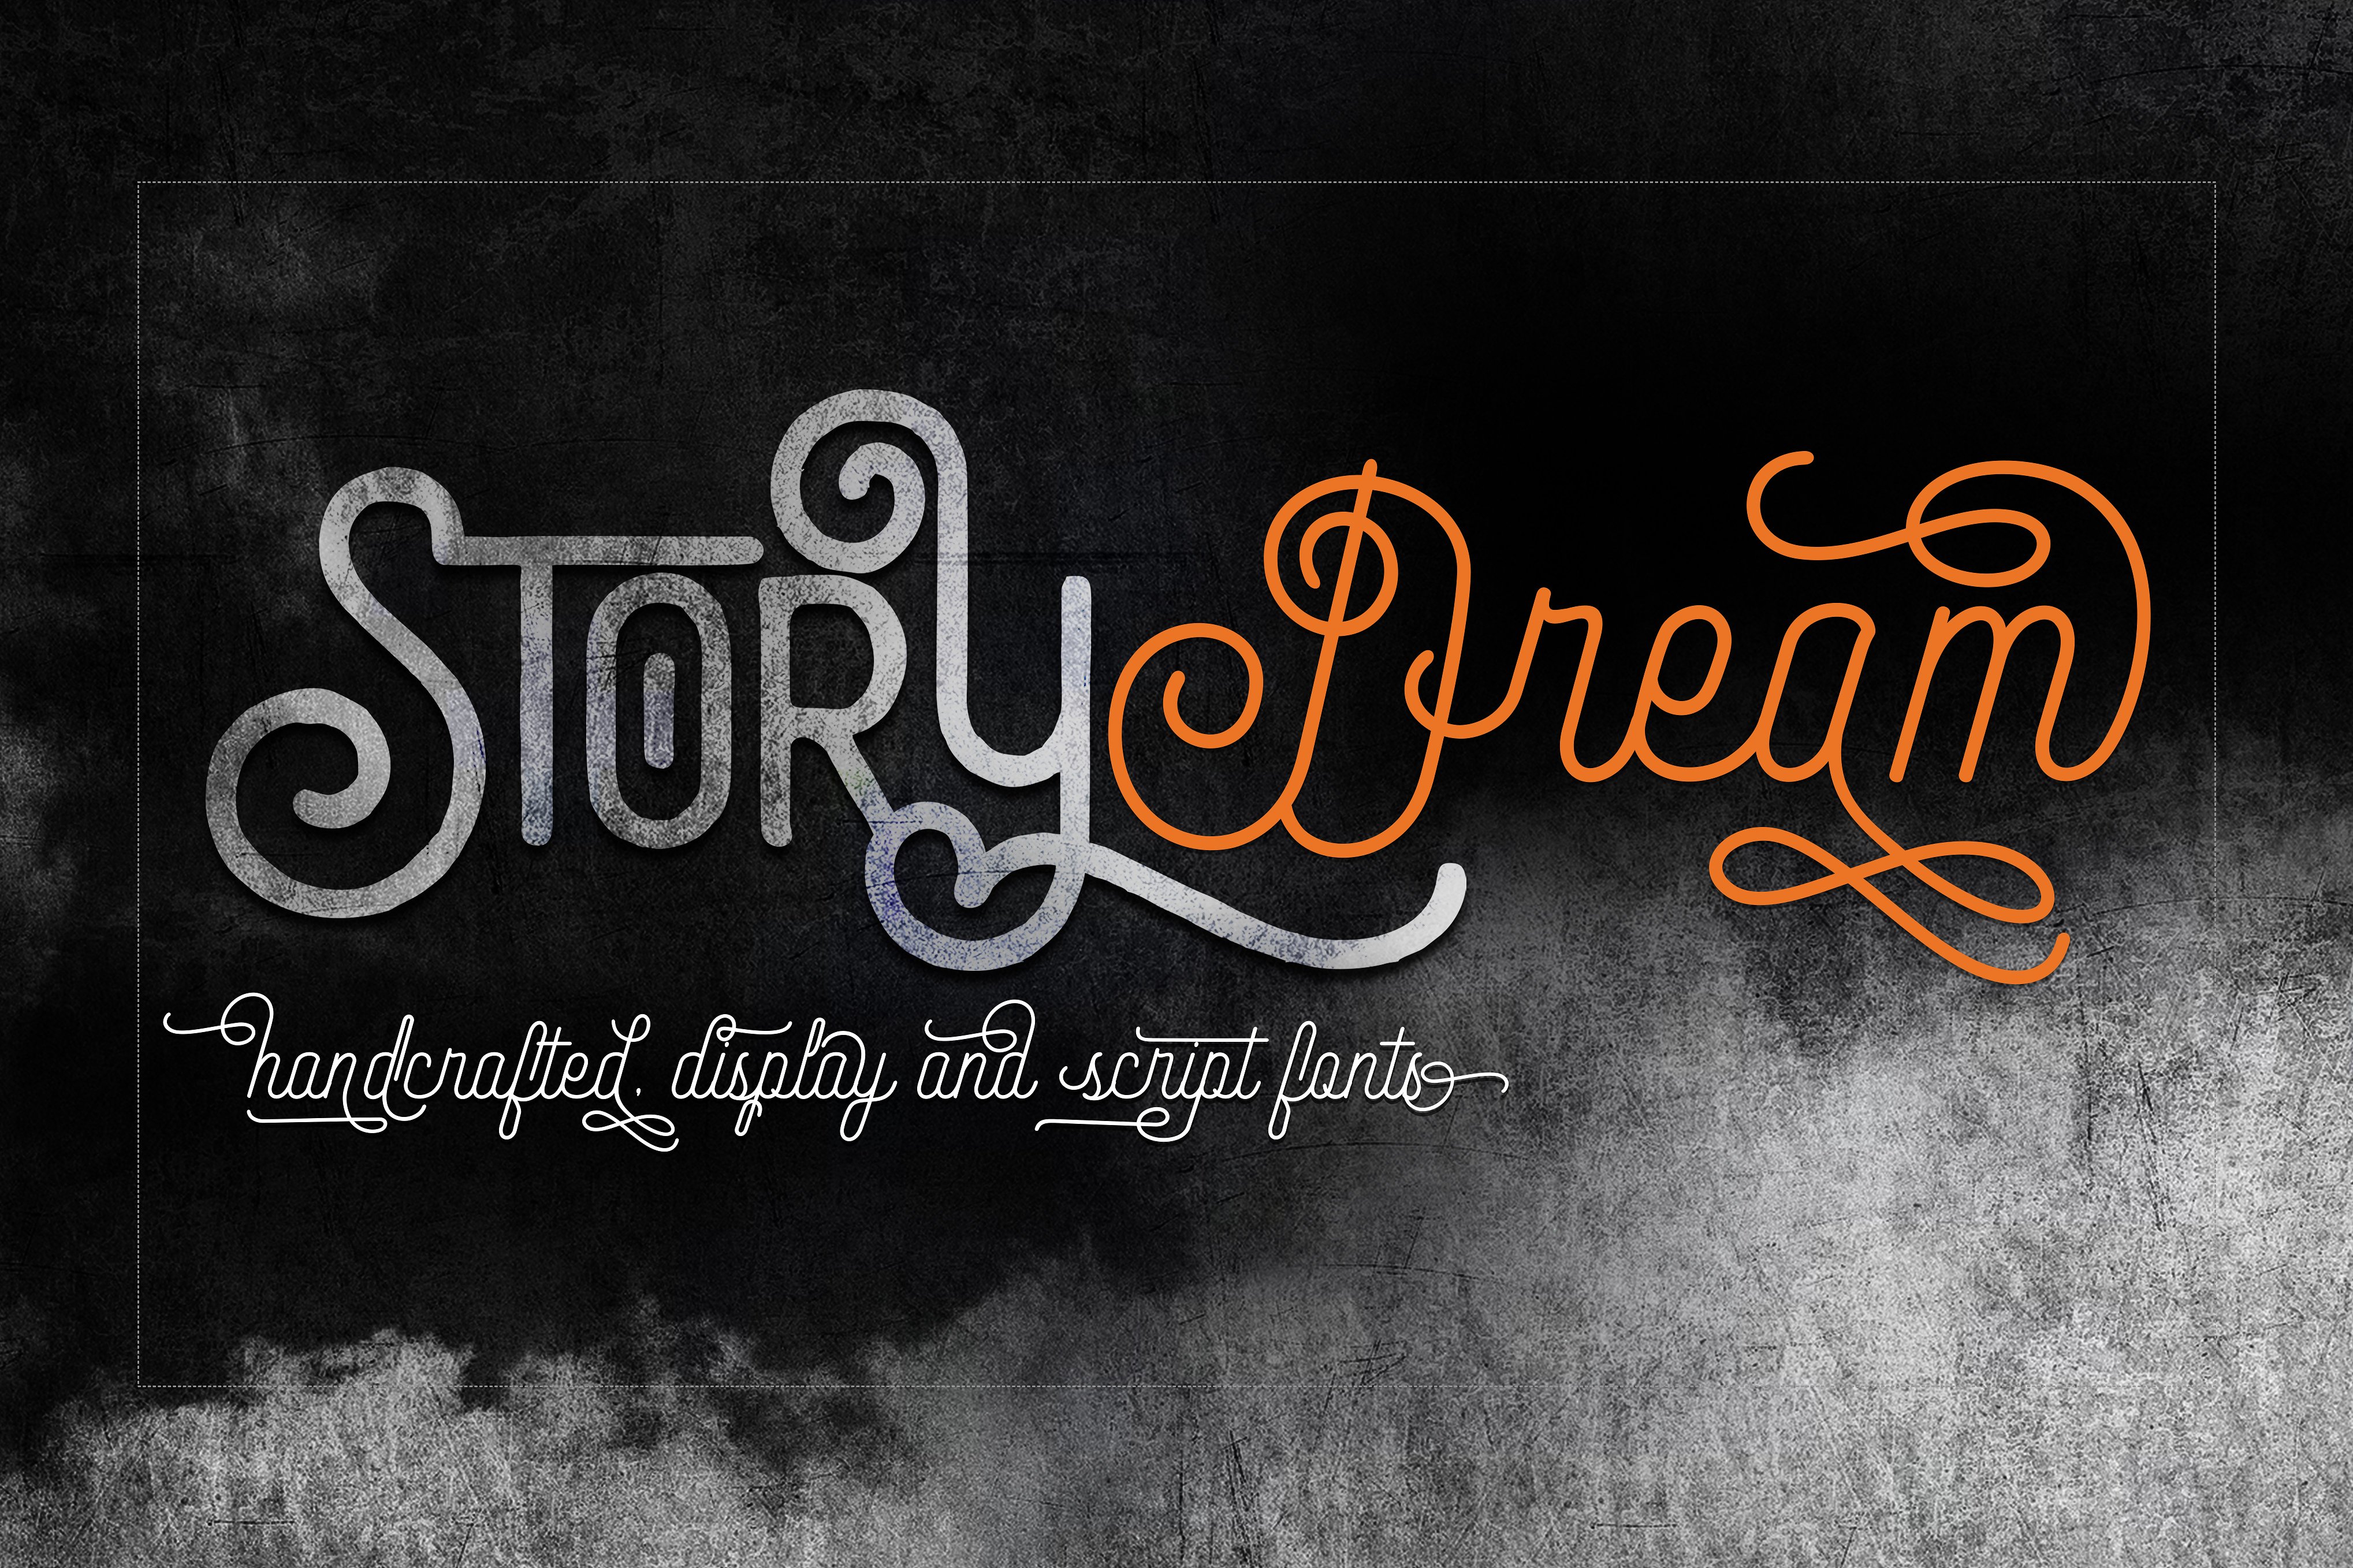 脚本和显示Story Dream, Script -amp;